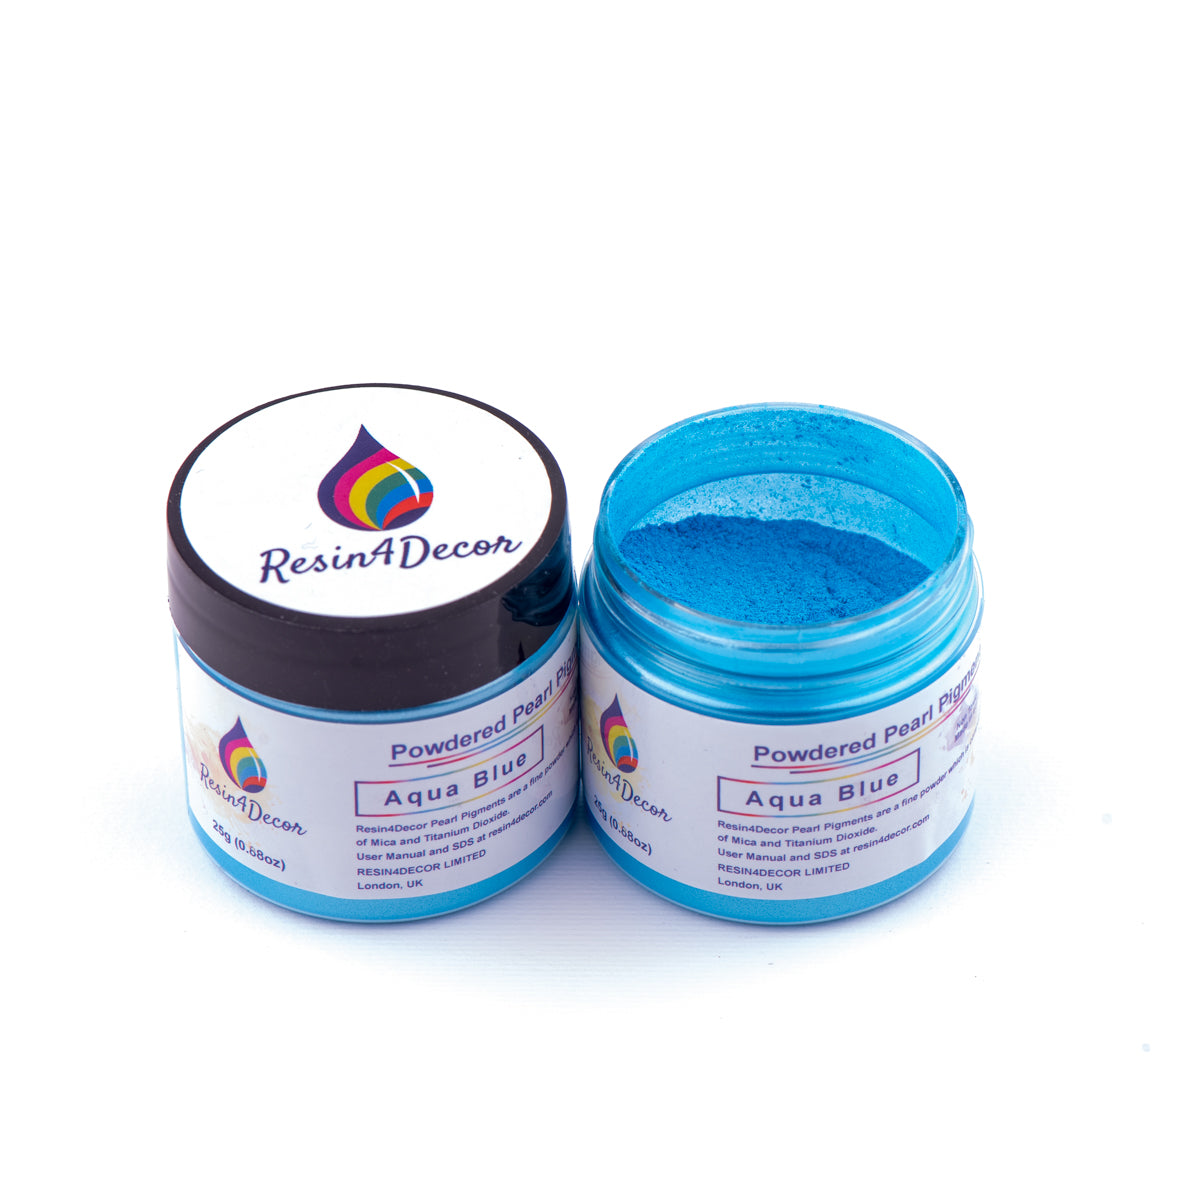 RESIN4DECOR Pearlescent Powdered Mica Pigment - RESIN4DECOR